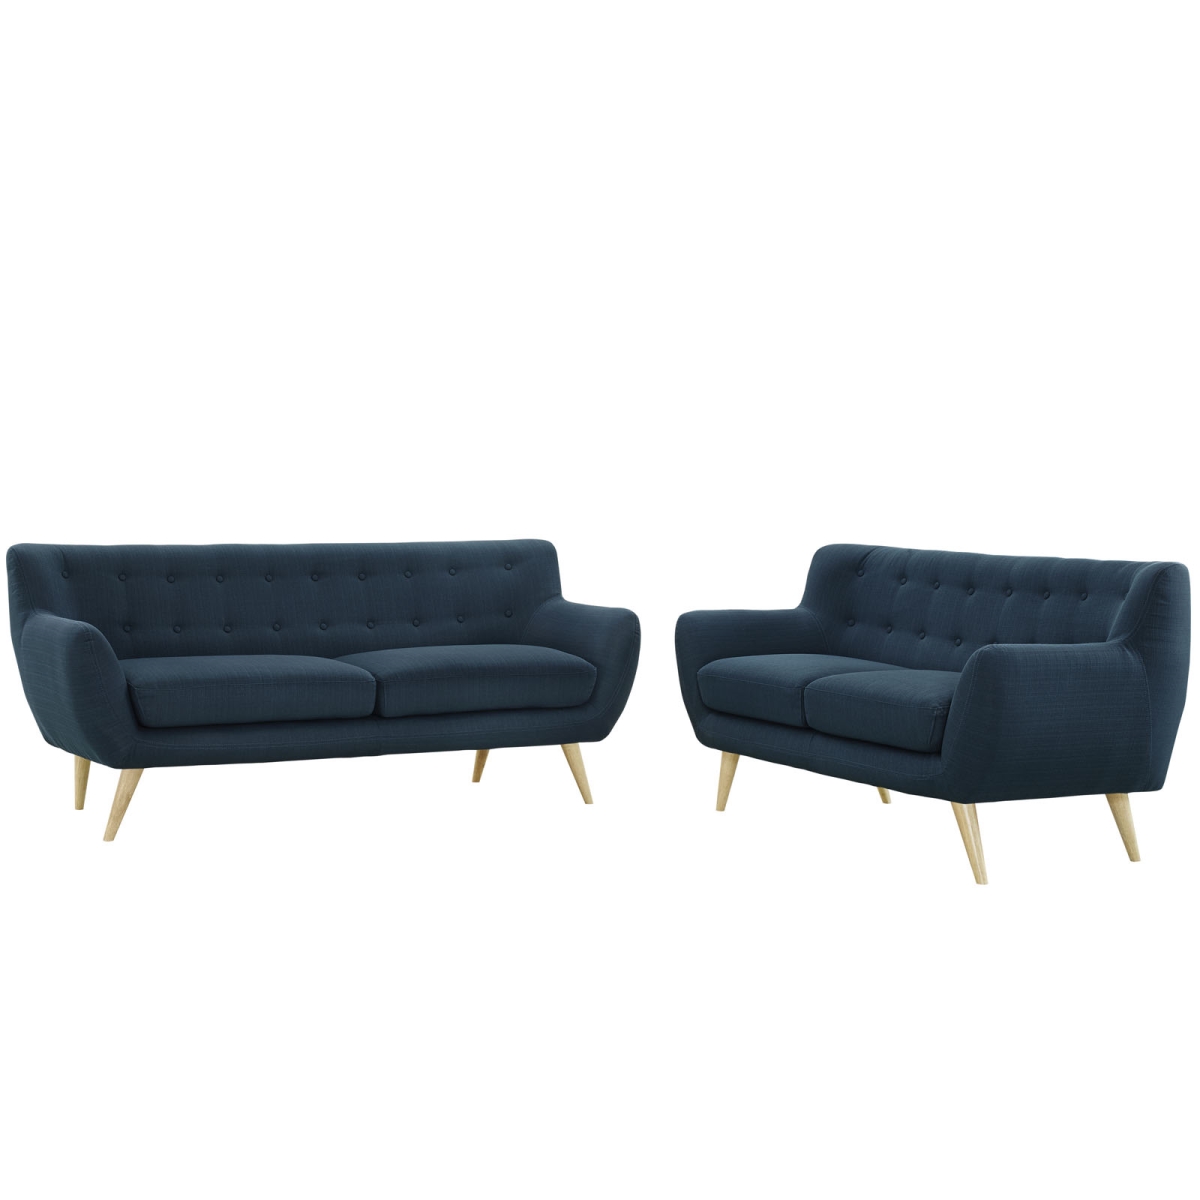 Eastend Eei-1785-azu-set Remark Sofa & Loveseat Set In Tufted Azure Fabric On Natural Wood Legs